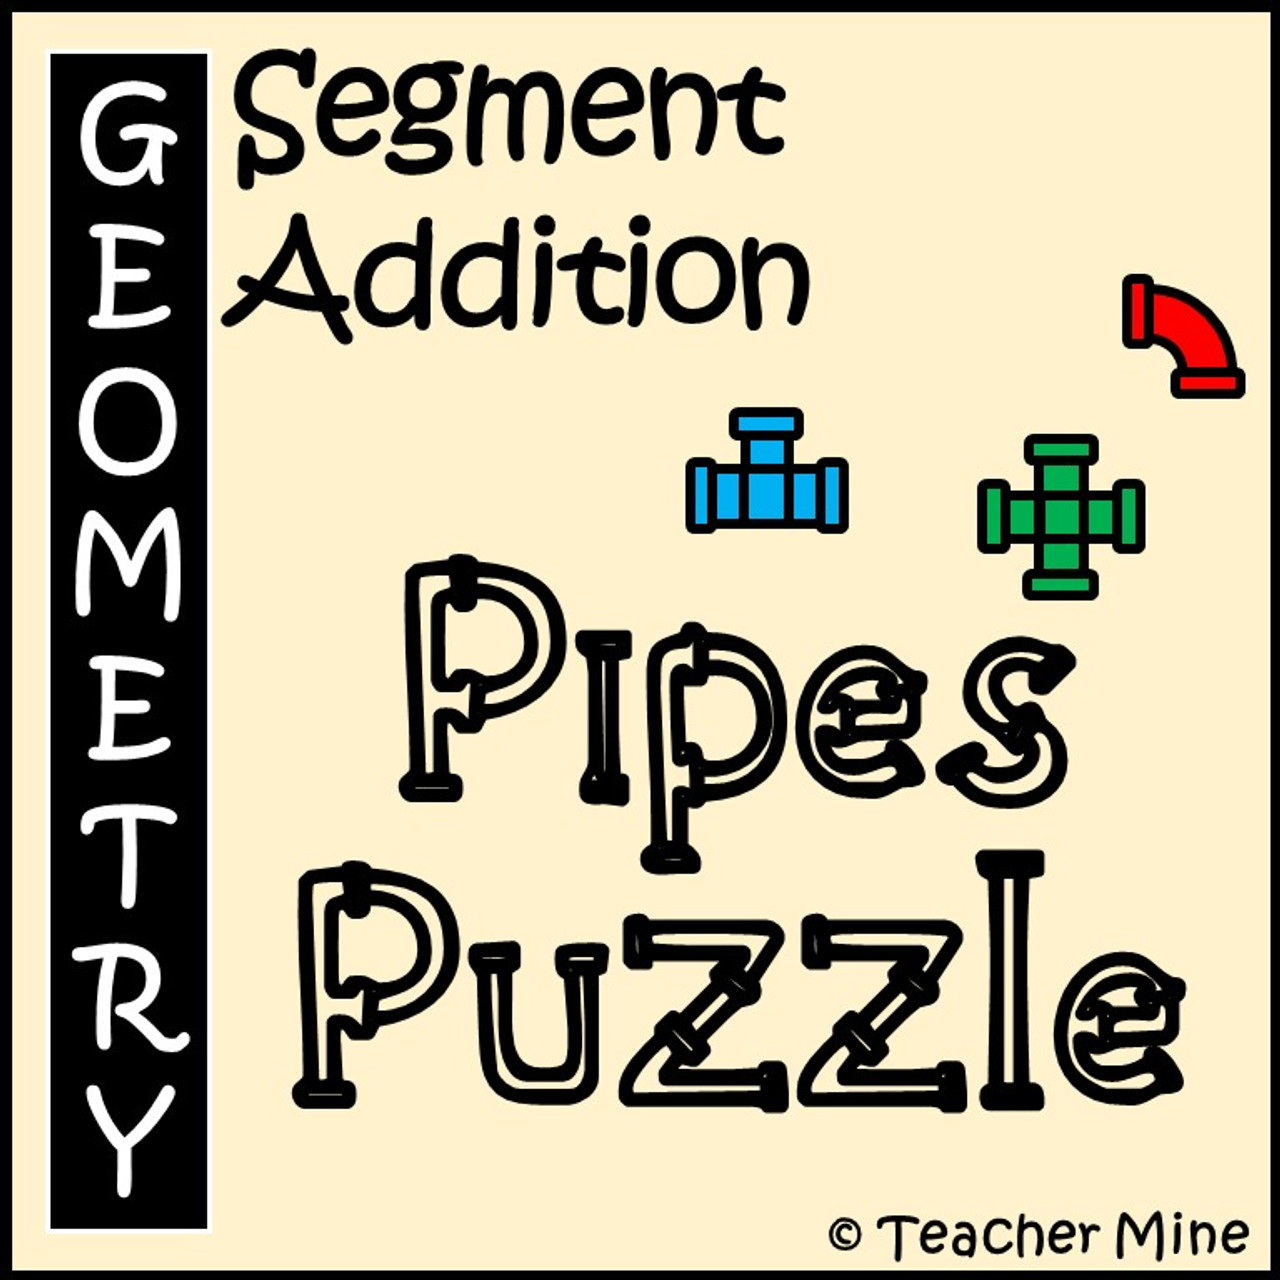 Segment Addition - Pipes Puzzle Activity